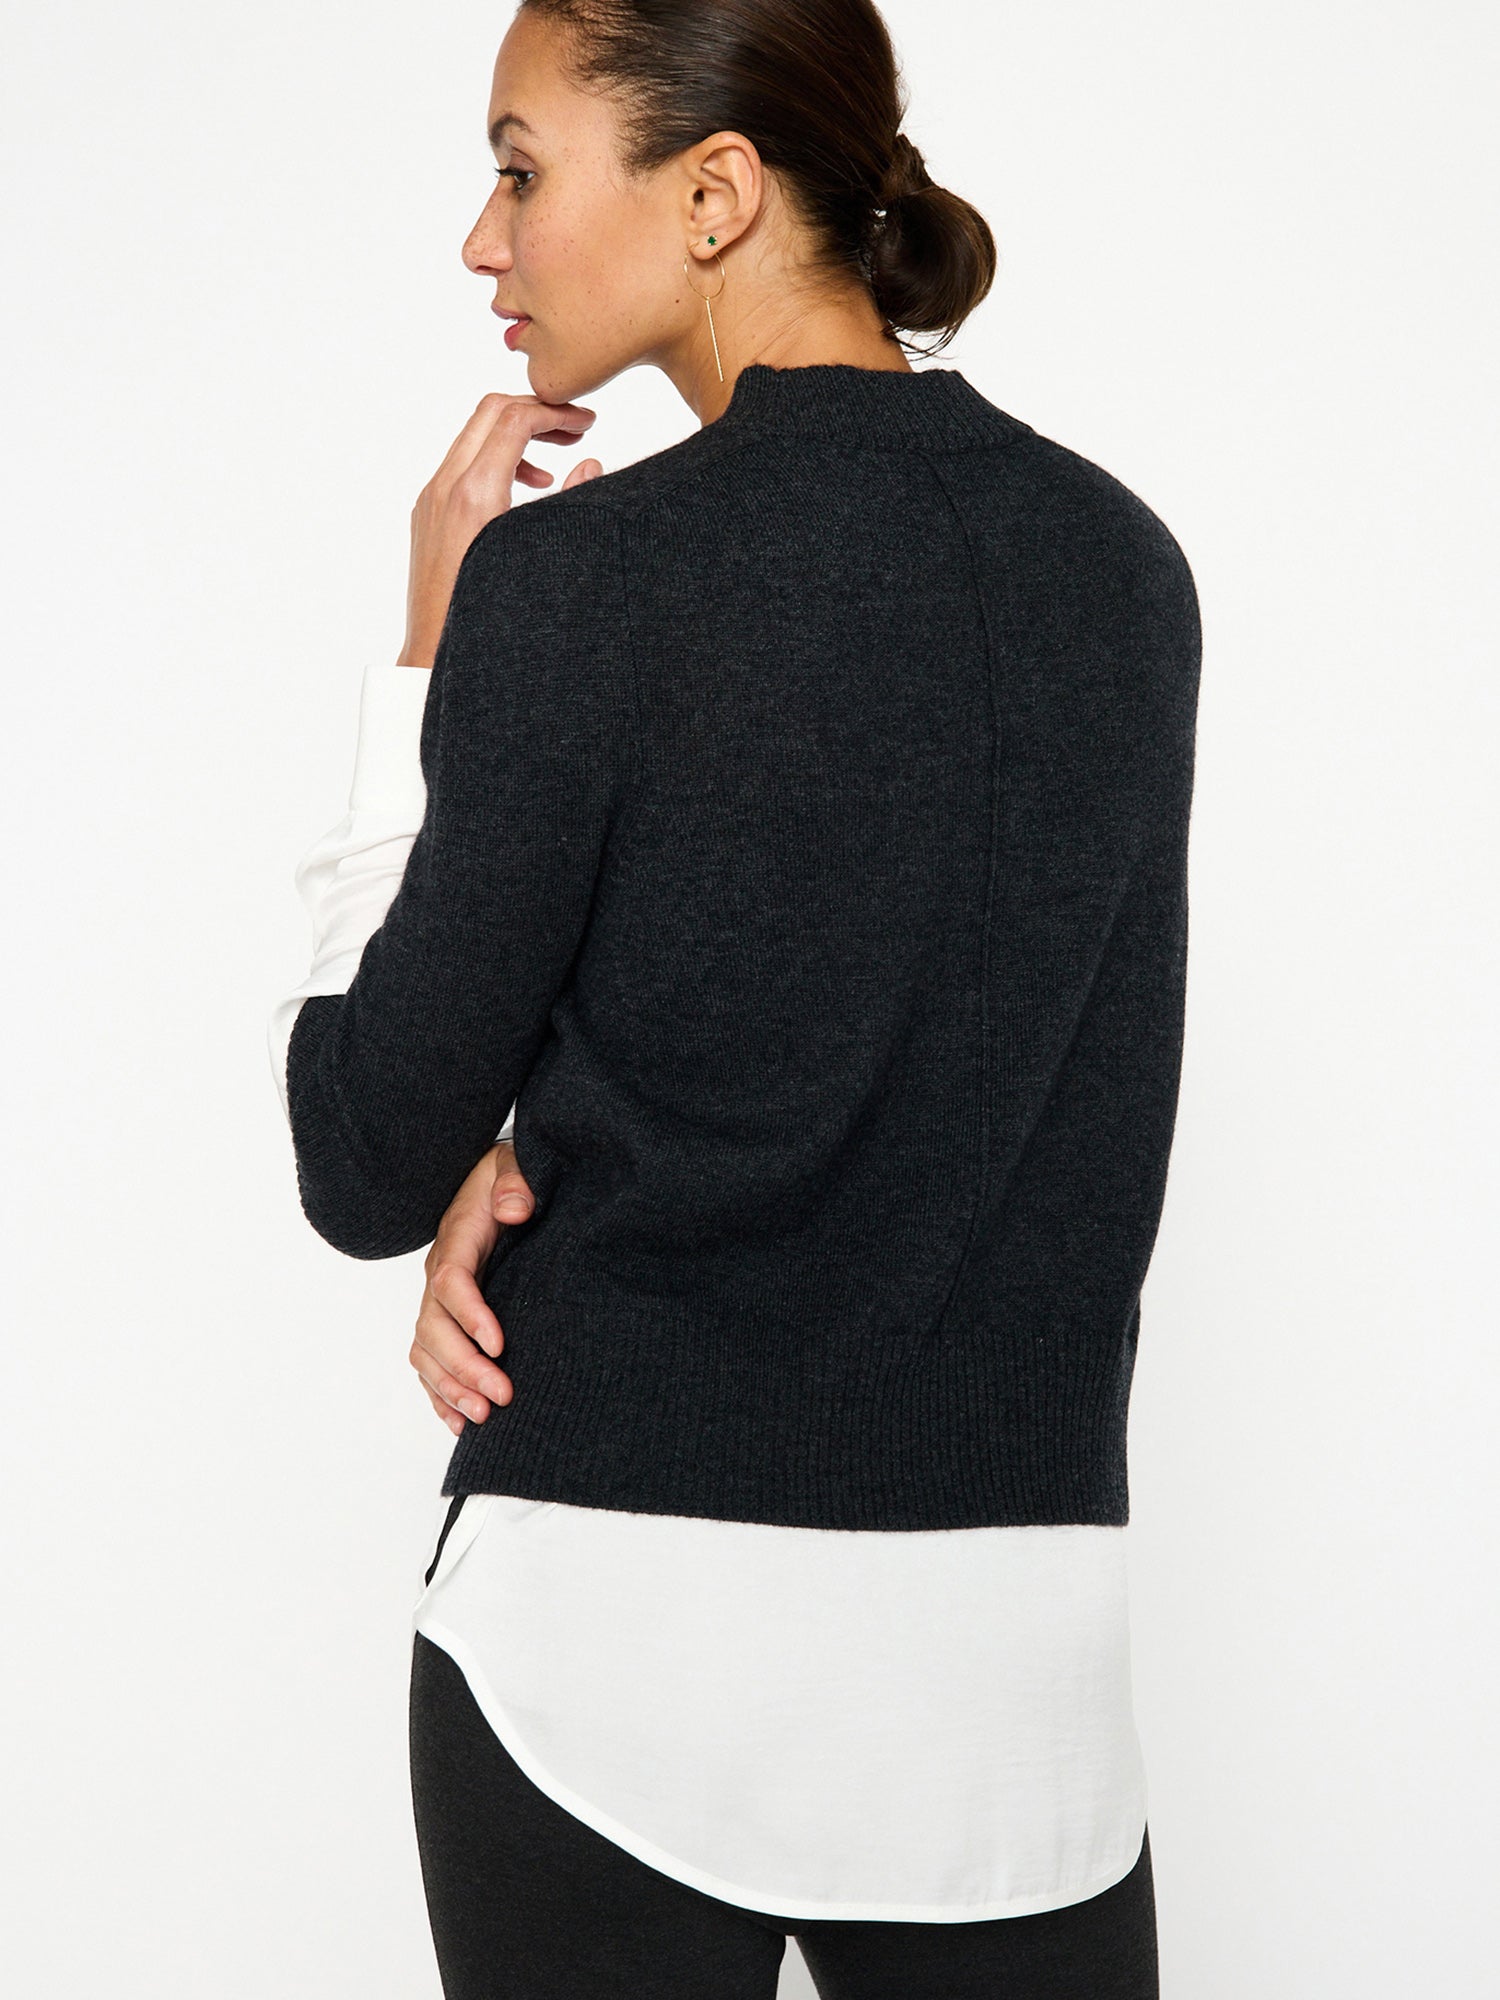 Stella dark grey layered crewneck sweater back view